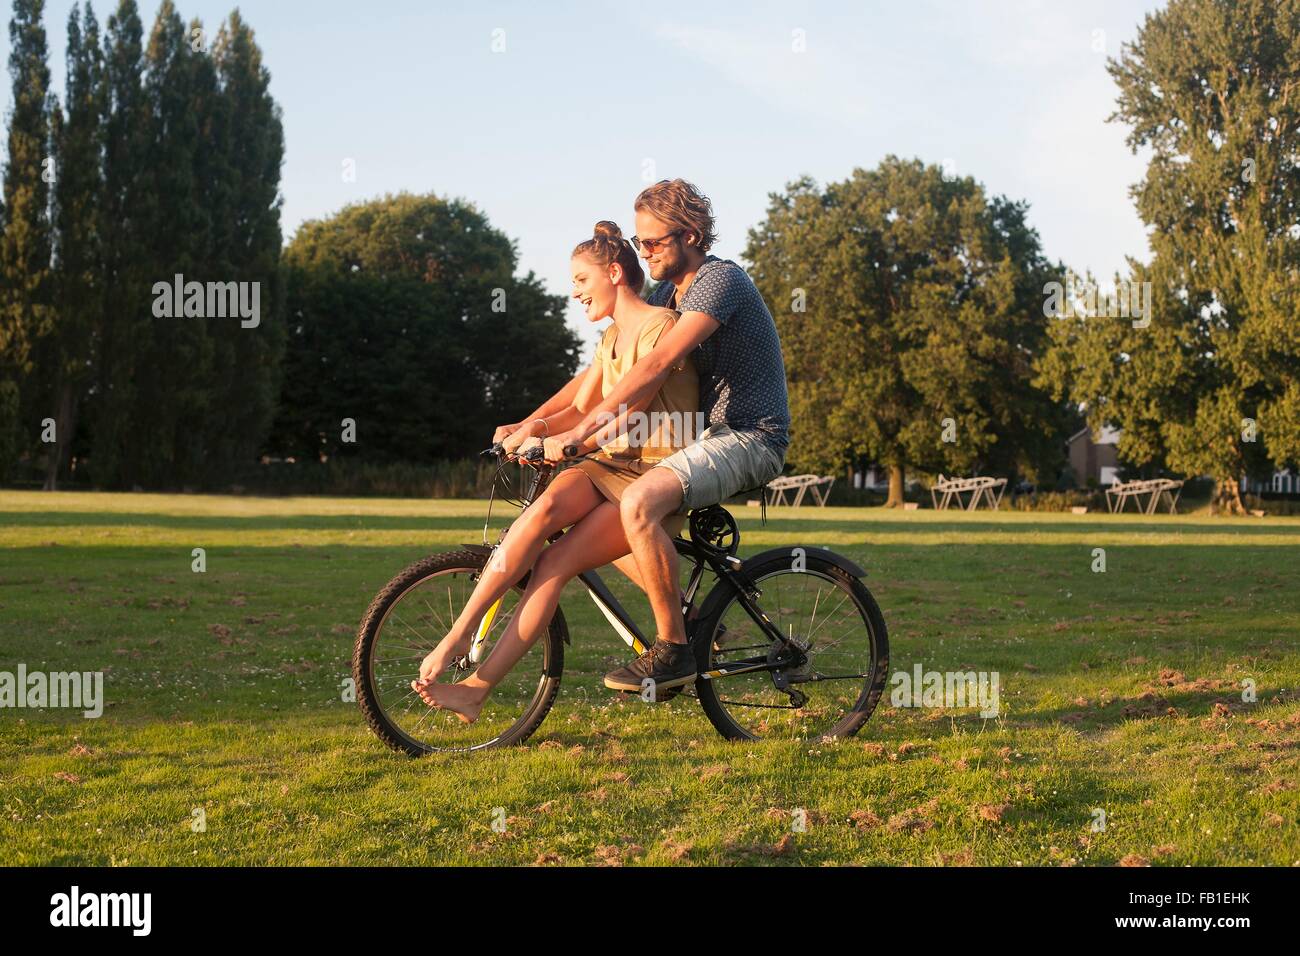 romantic couple on bike images